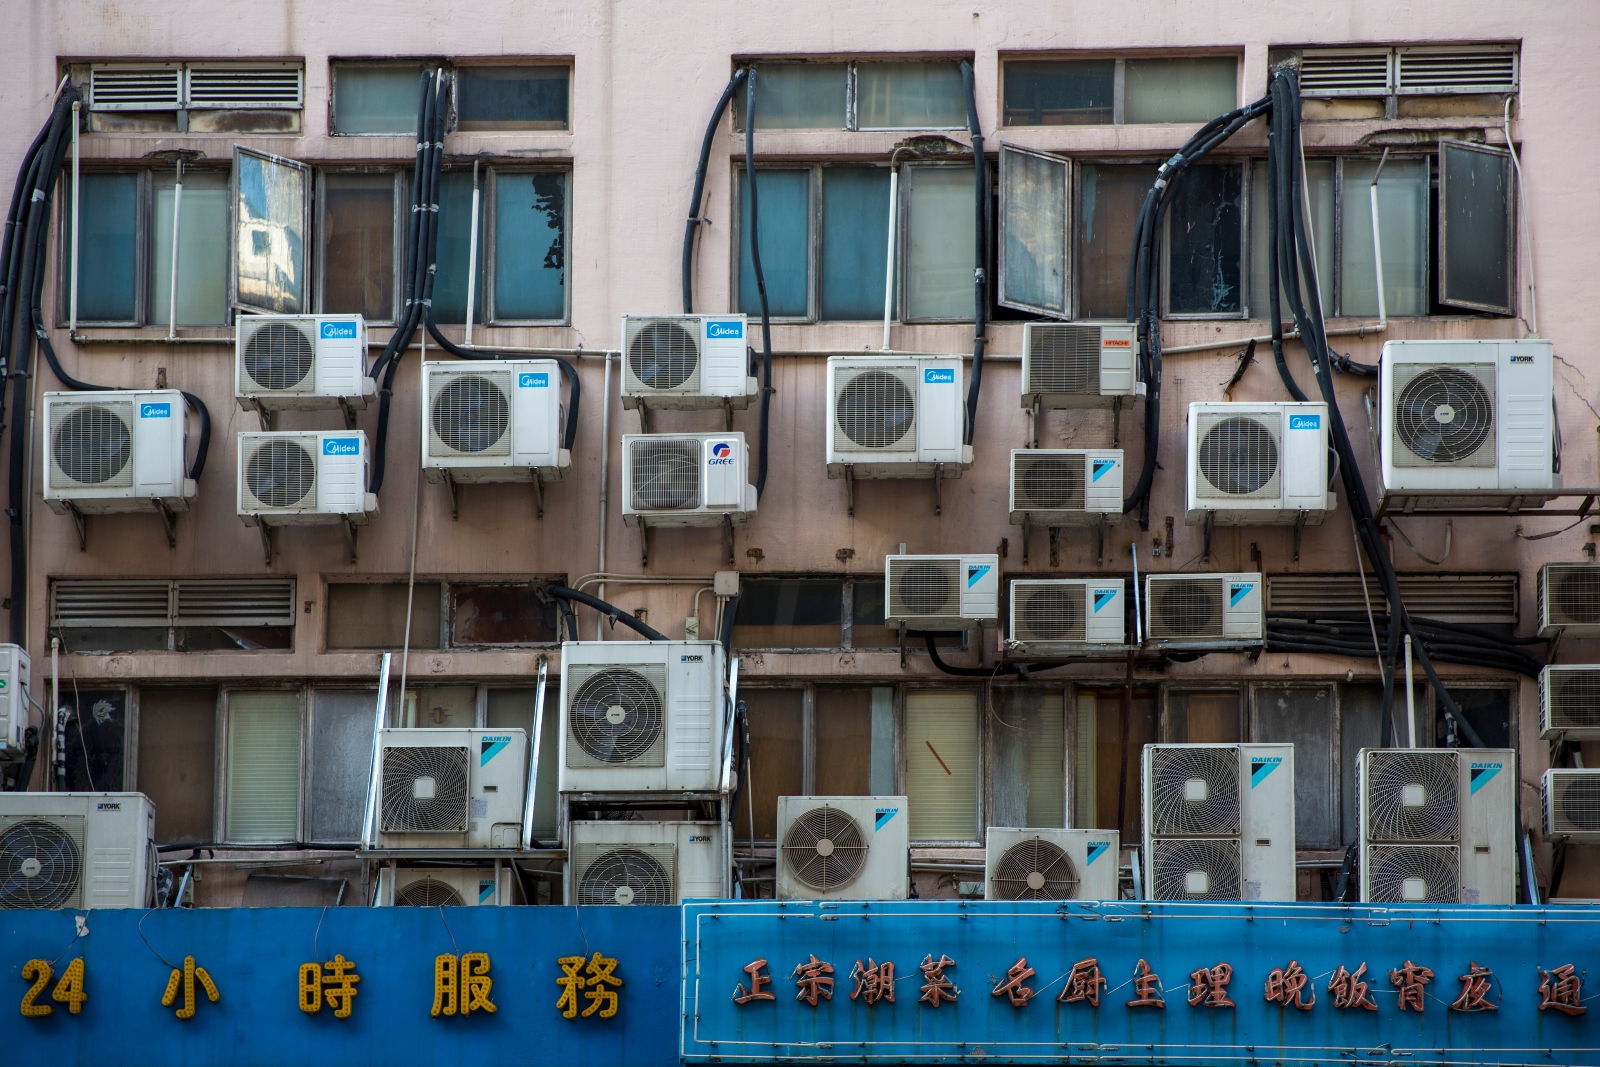 Wall mounted air-conditioning units adorning a building in Hong Kong